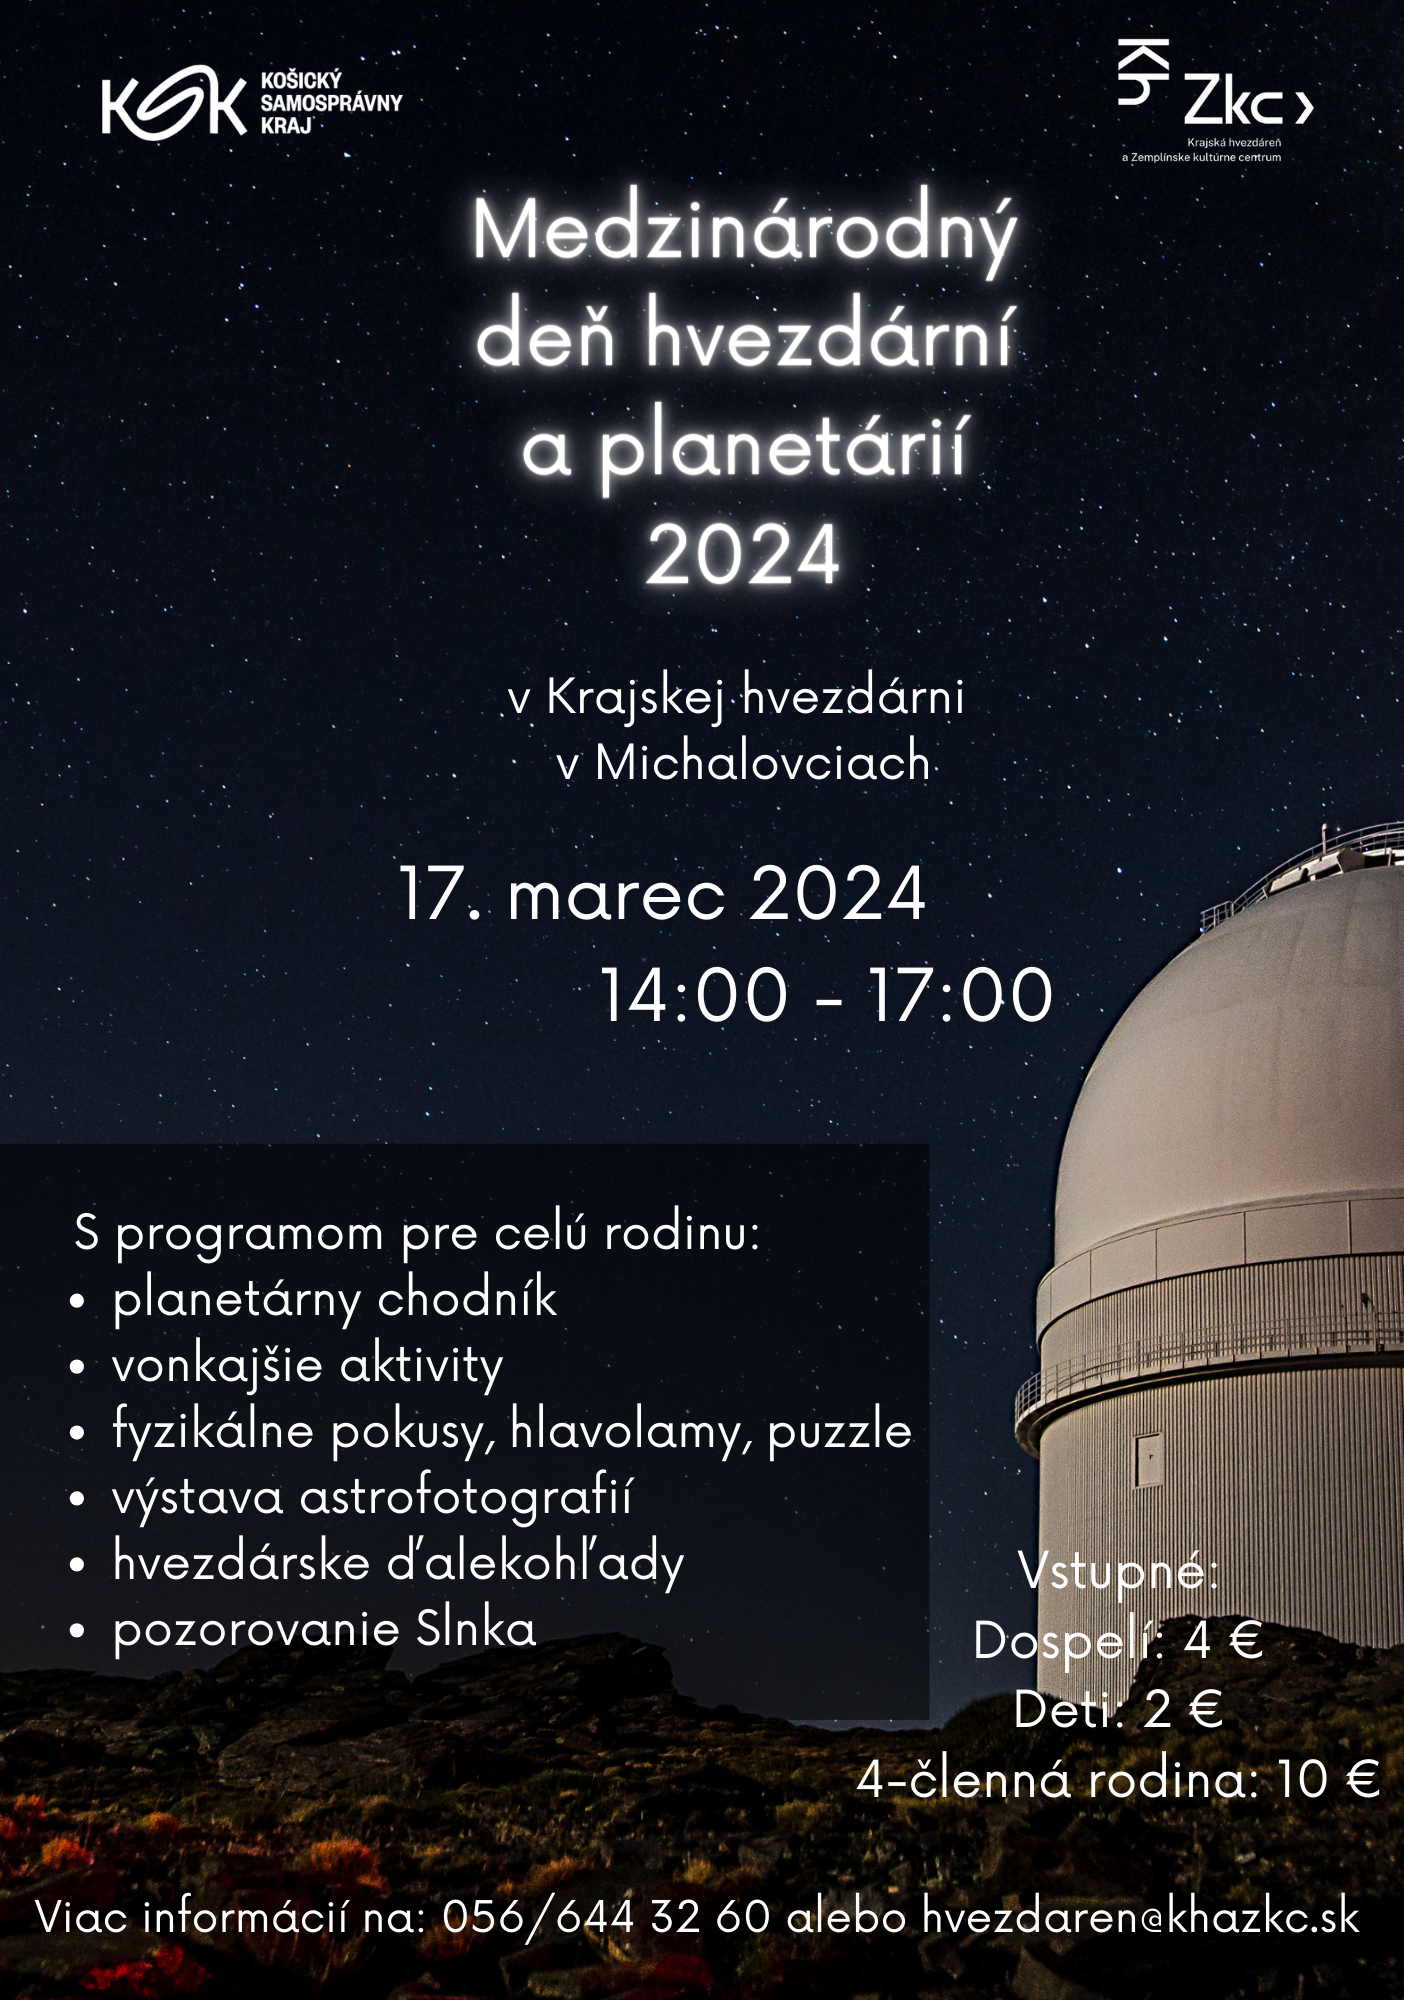 Medzinárodný deň hvezdární a planetárií 2024